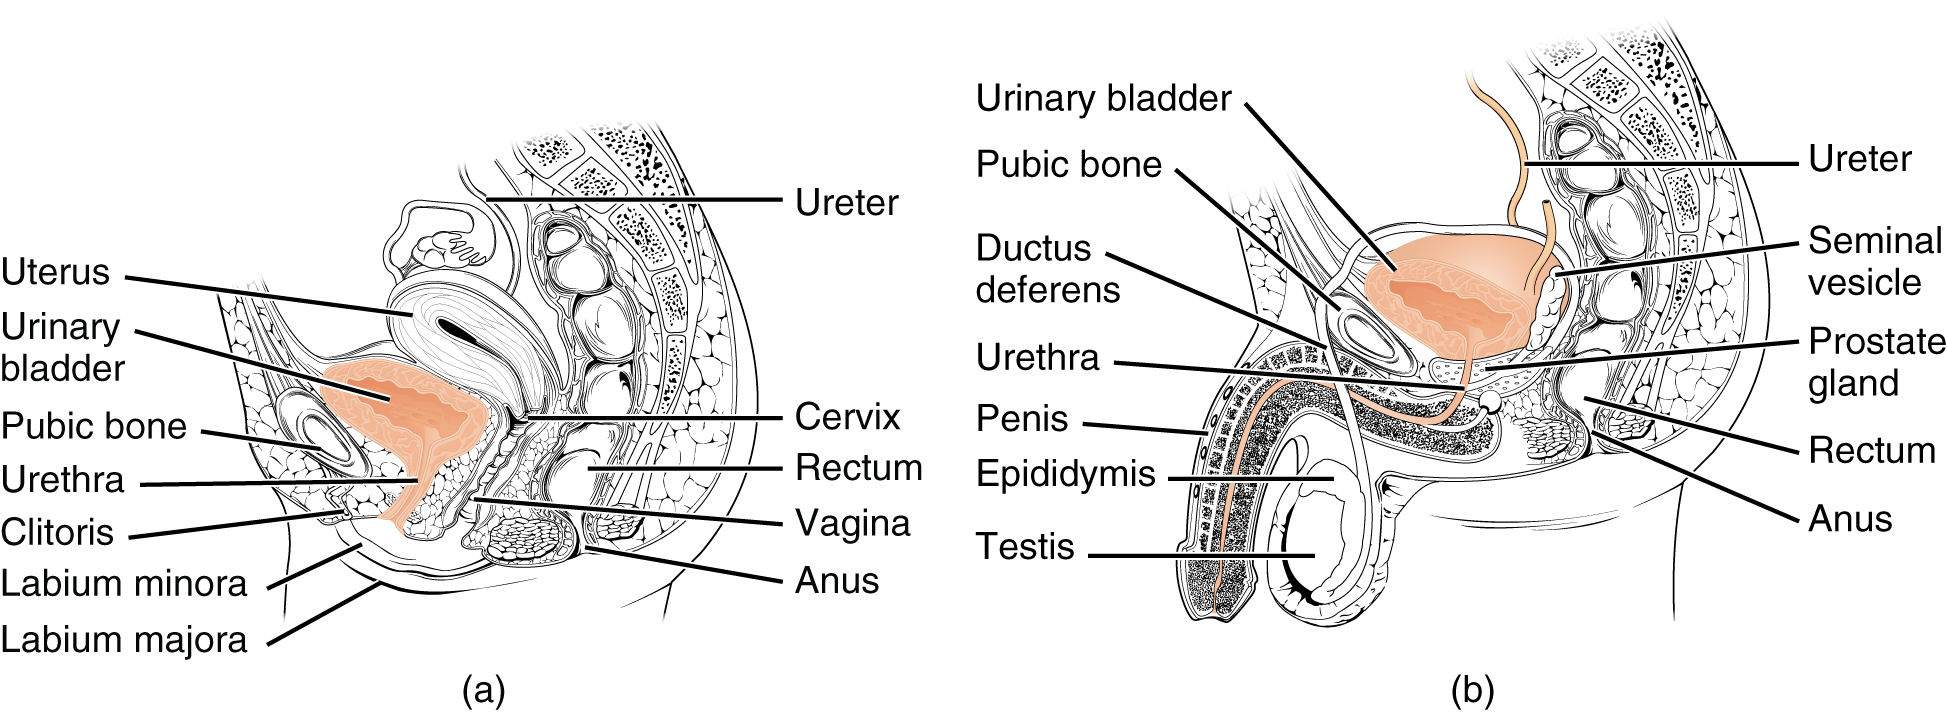 Diagrams of female and male genitalia. Image descriptions available.